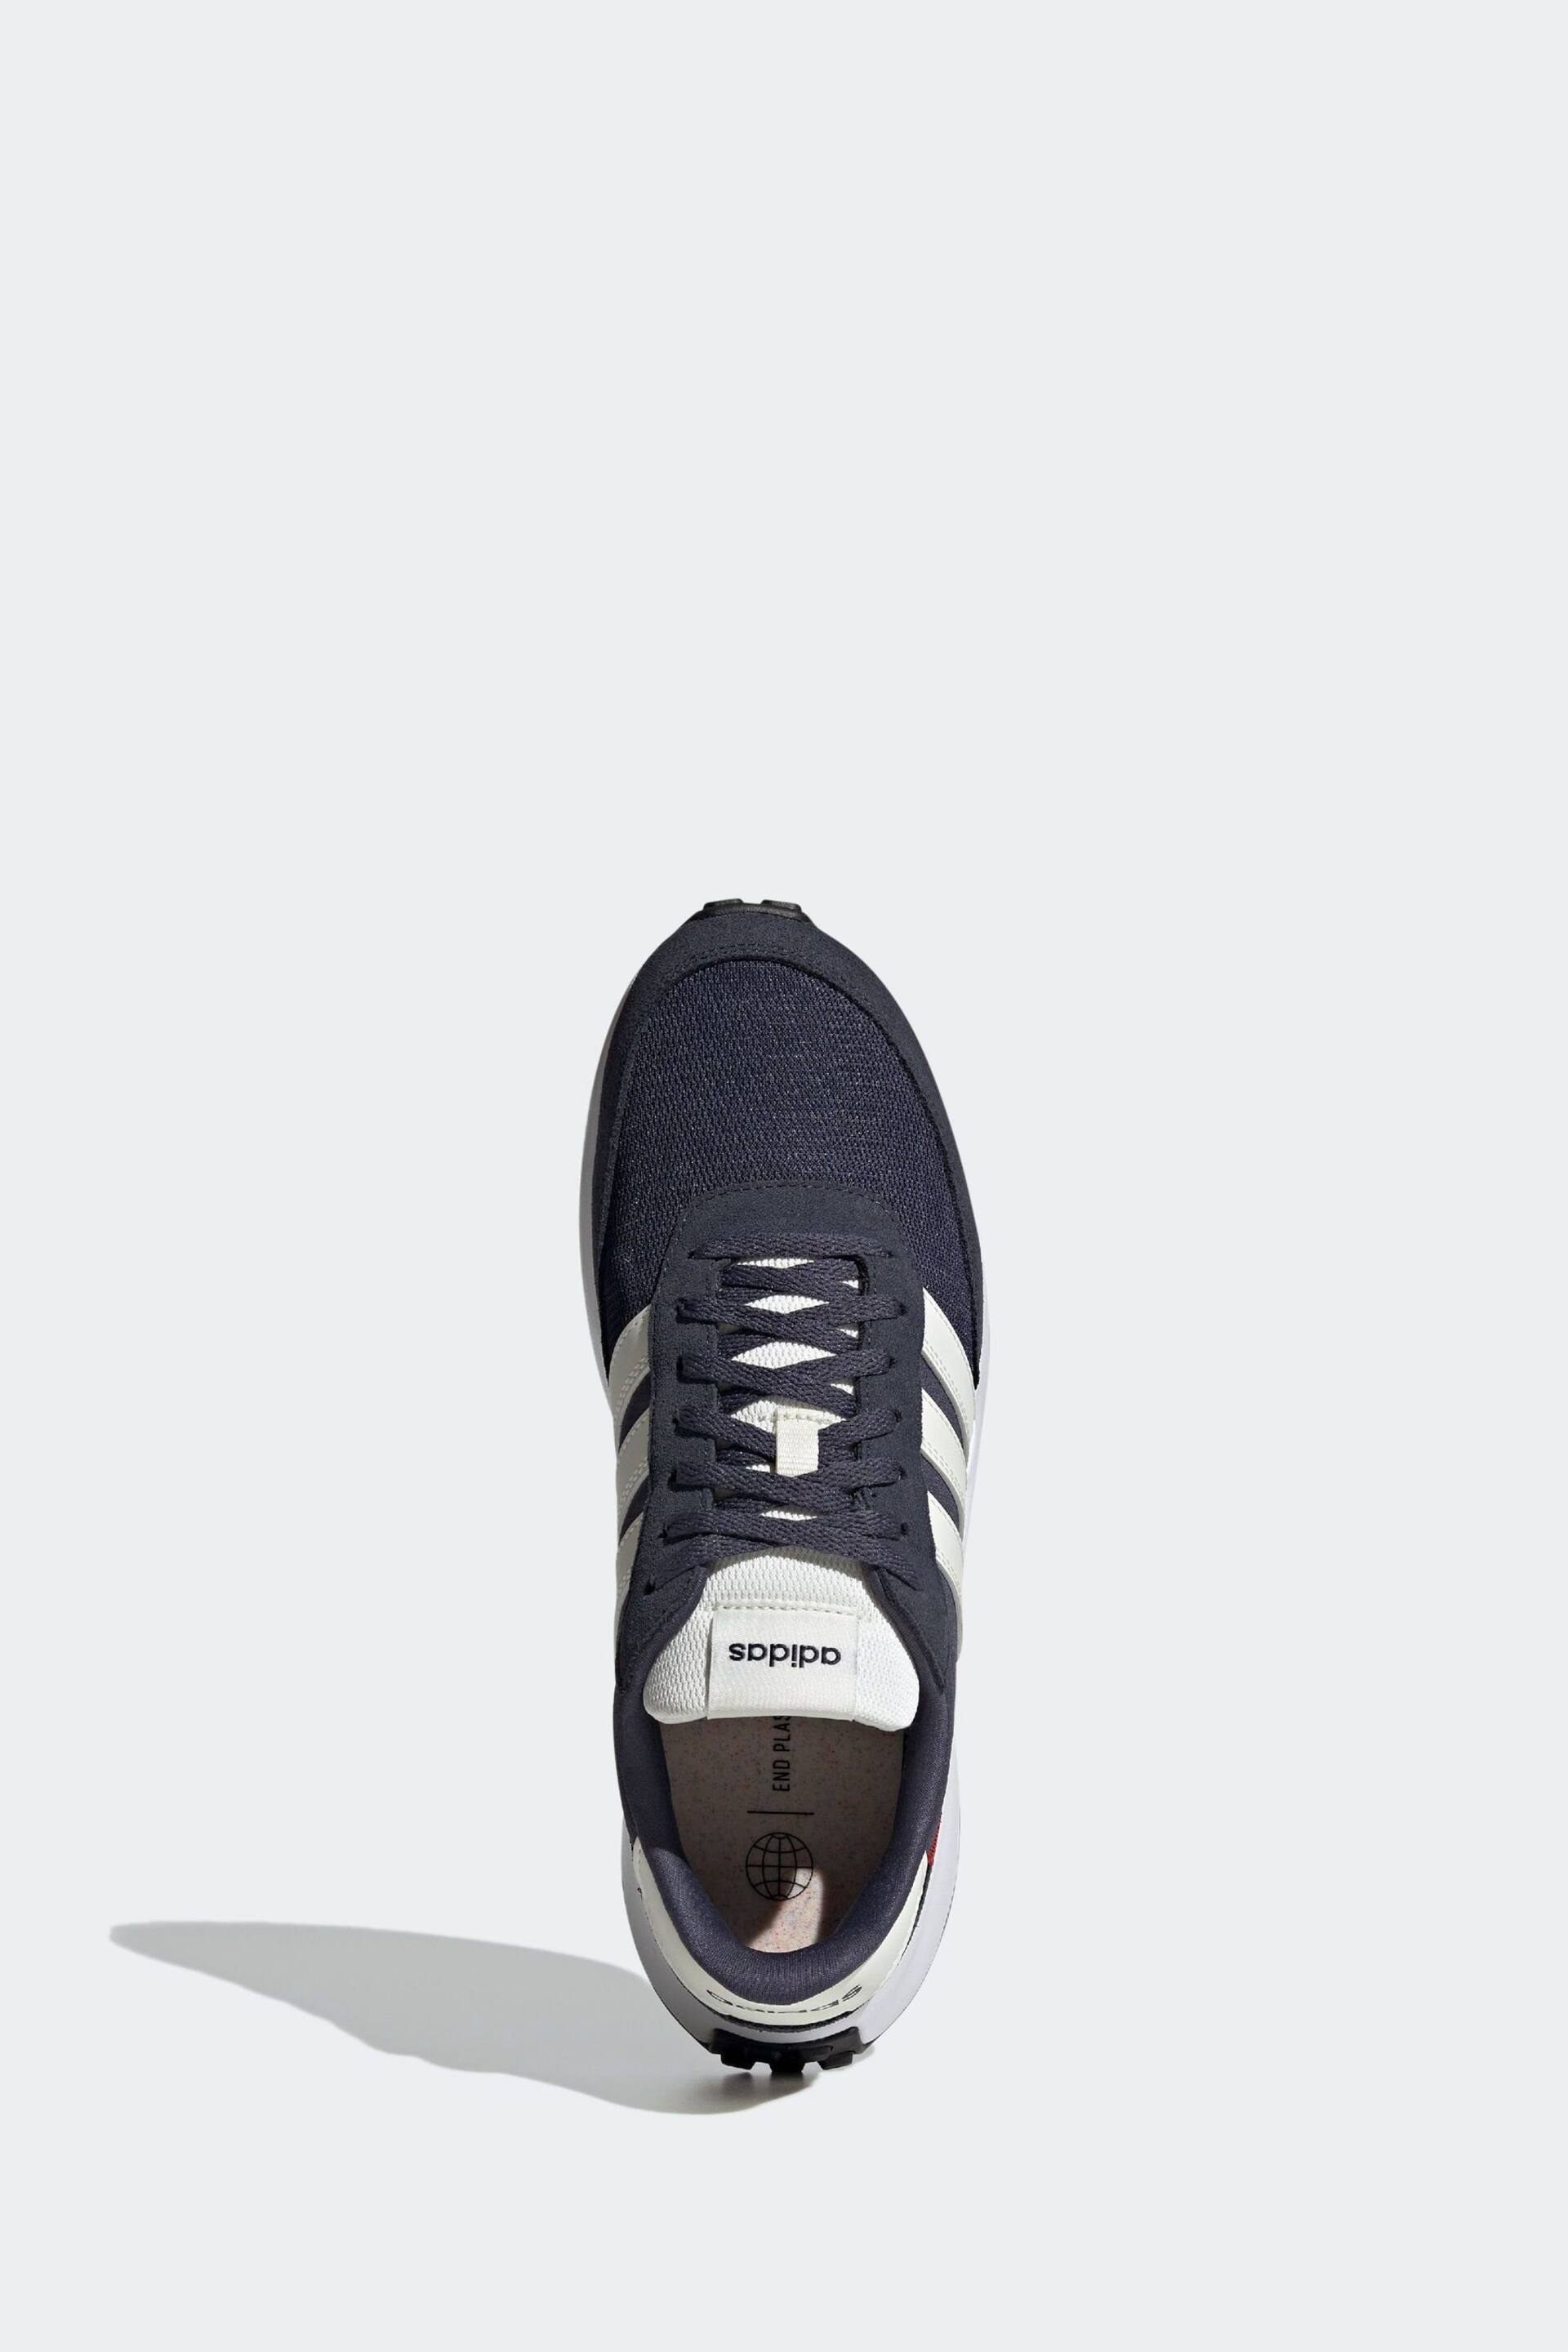 adidas Blue/white Run 70s Lifestyle Running Trainers - Image 5 of 8